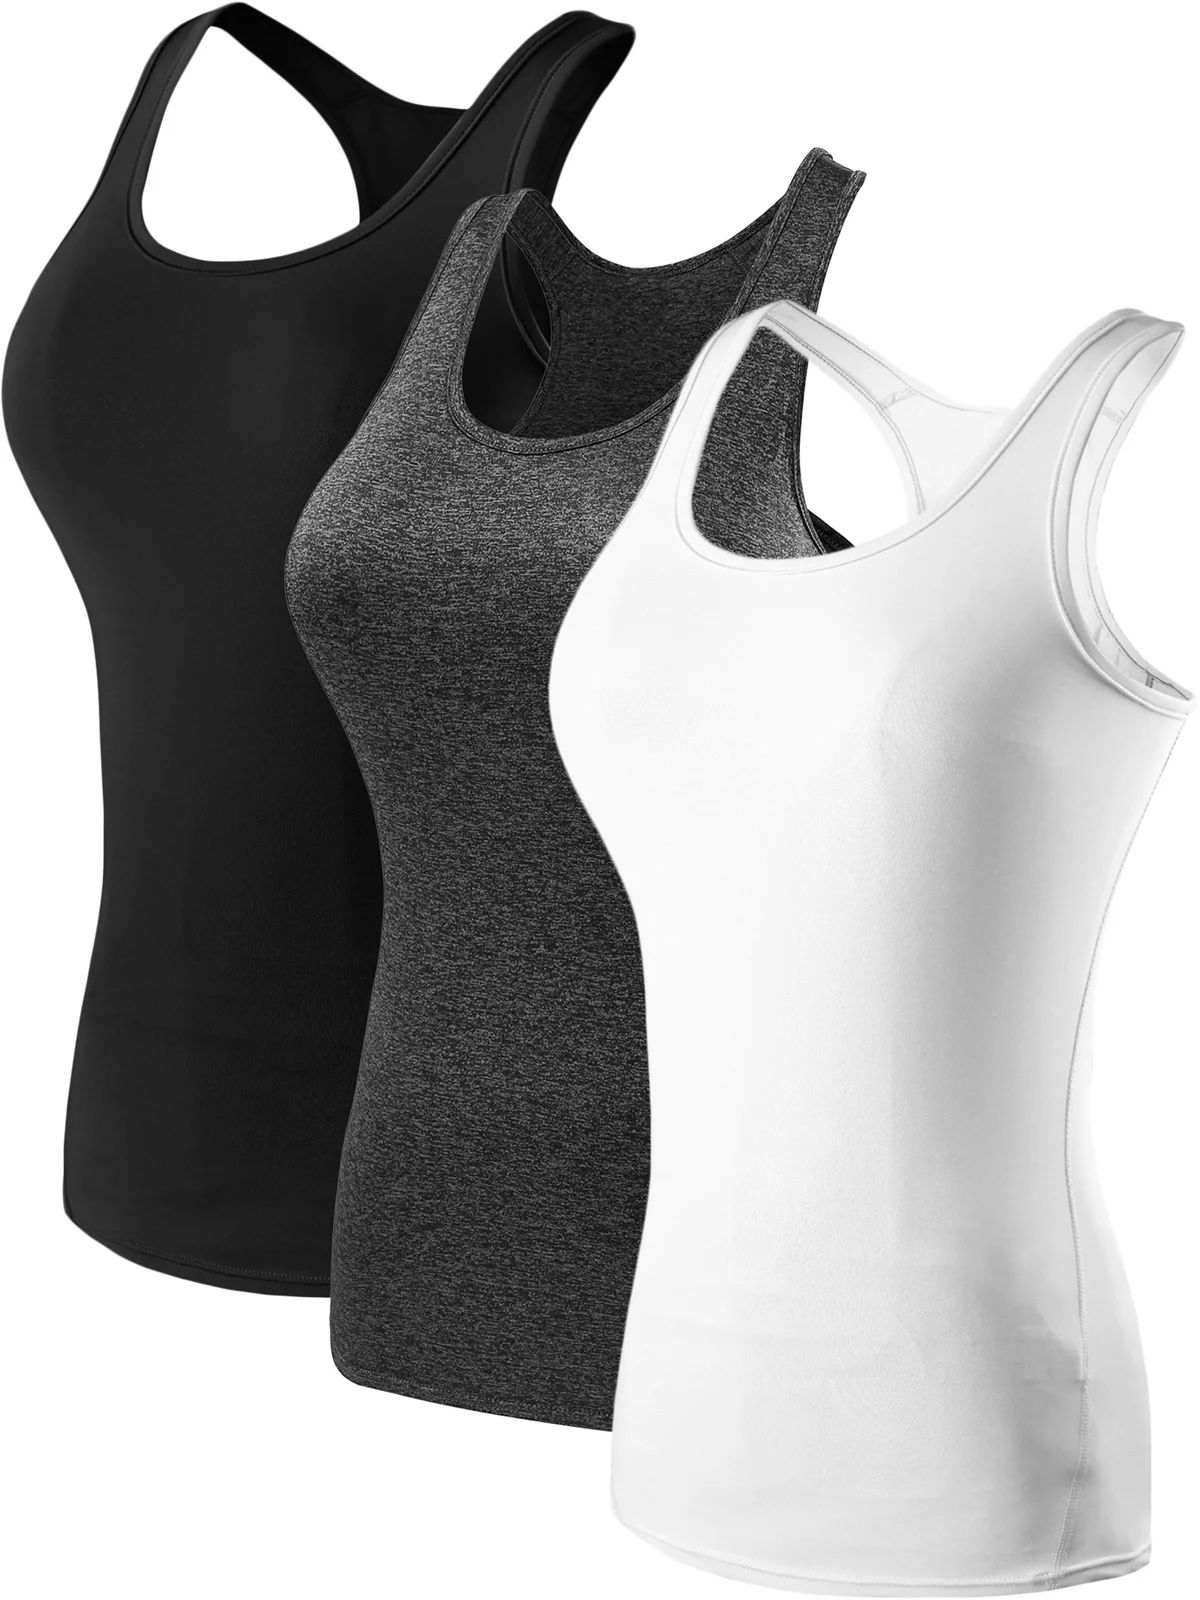 NELEUS Womens Compression Base Layer Dry Fit Tank Top 3 Pack,Black+Gray+White,US Size M | Walmart (US)